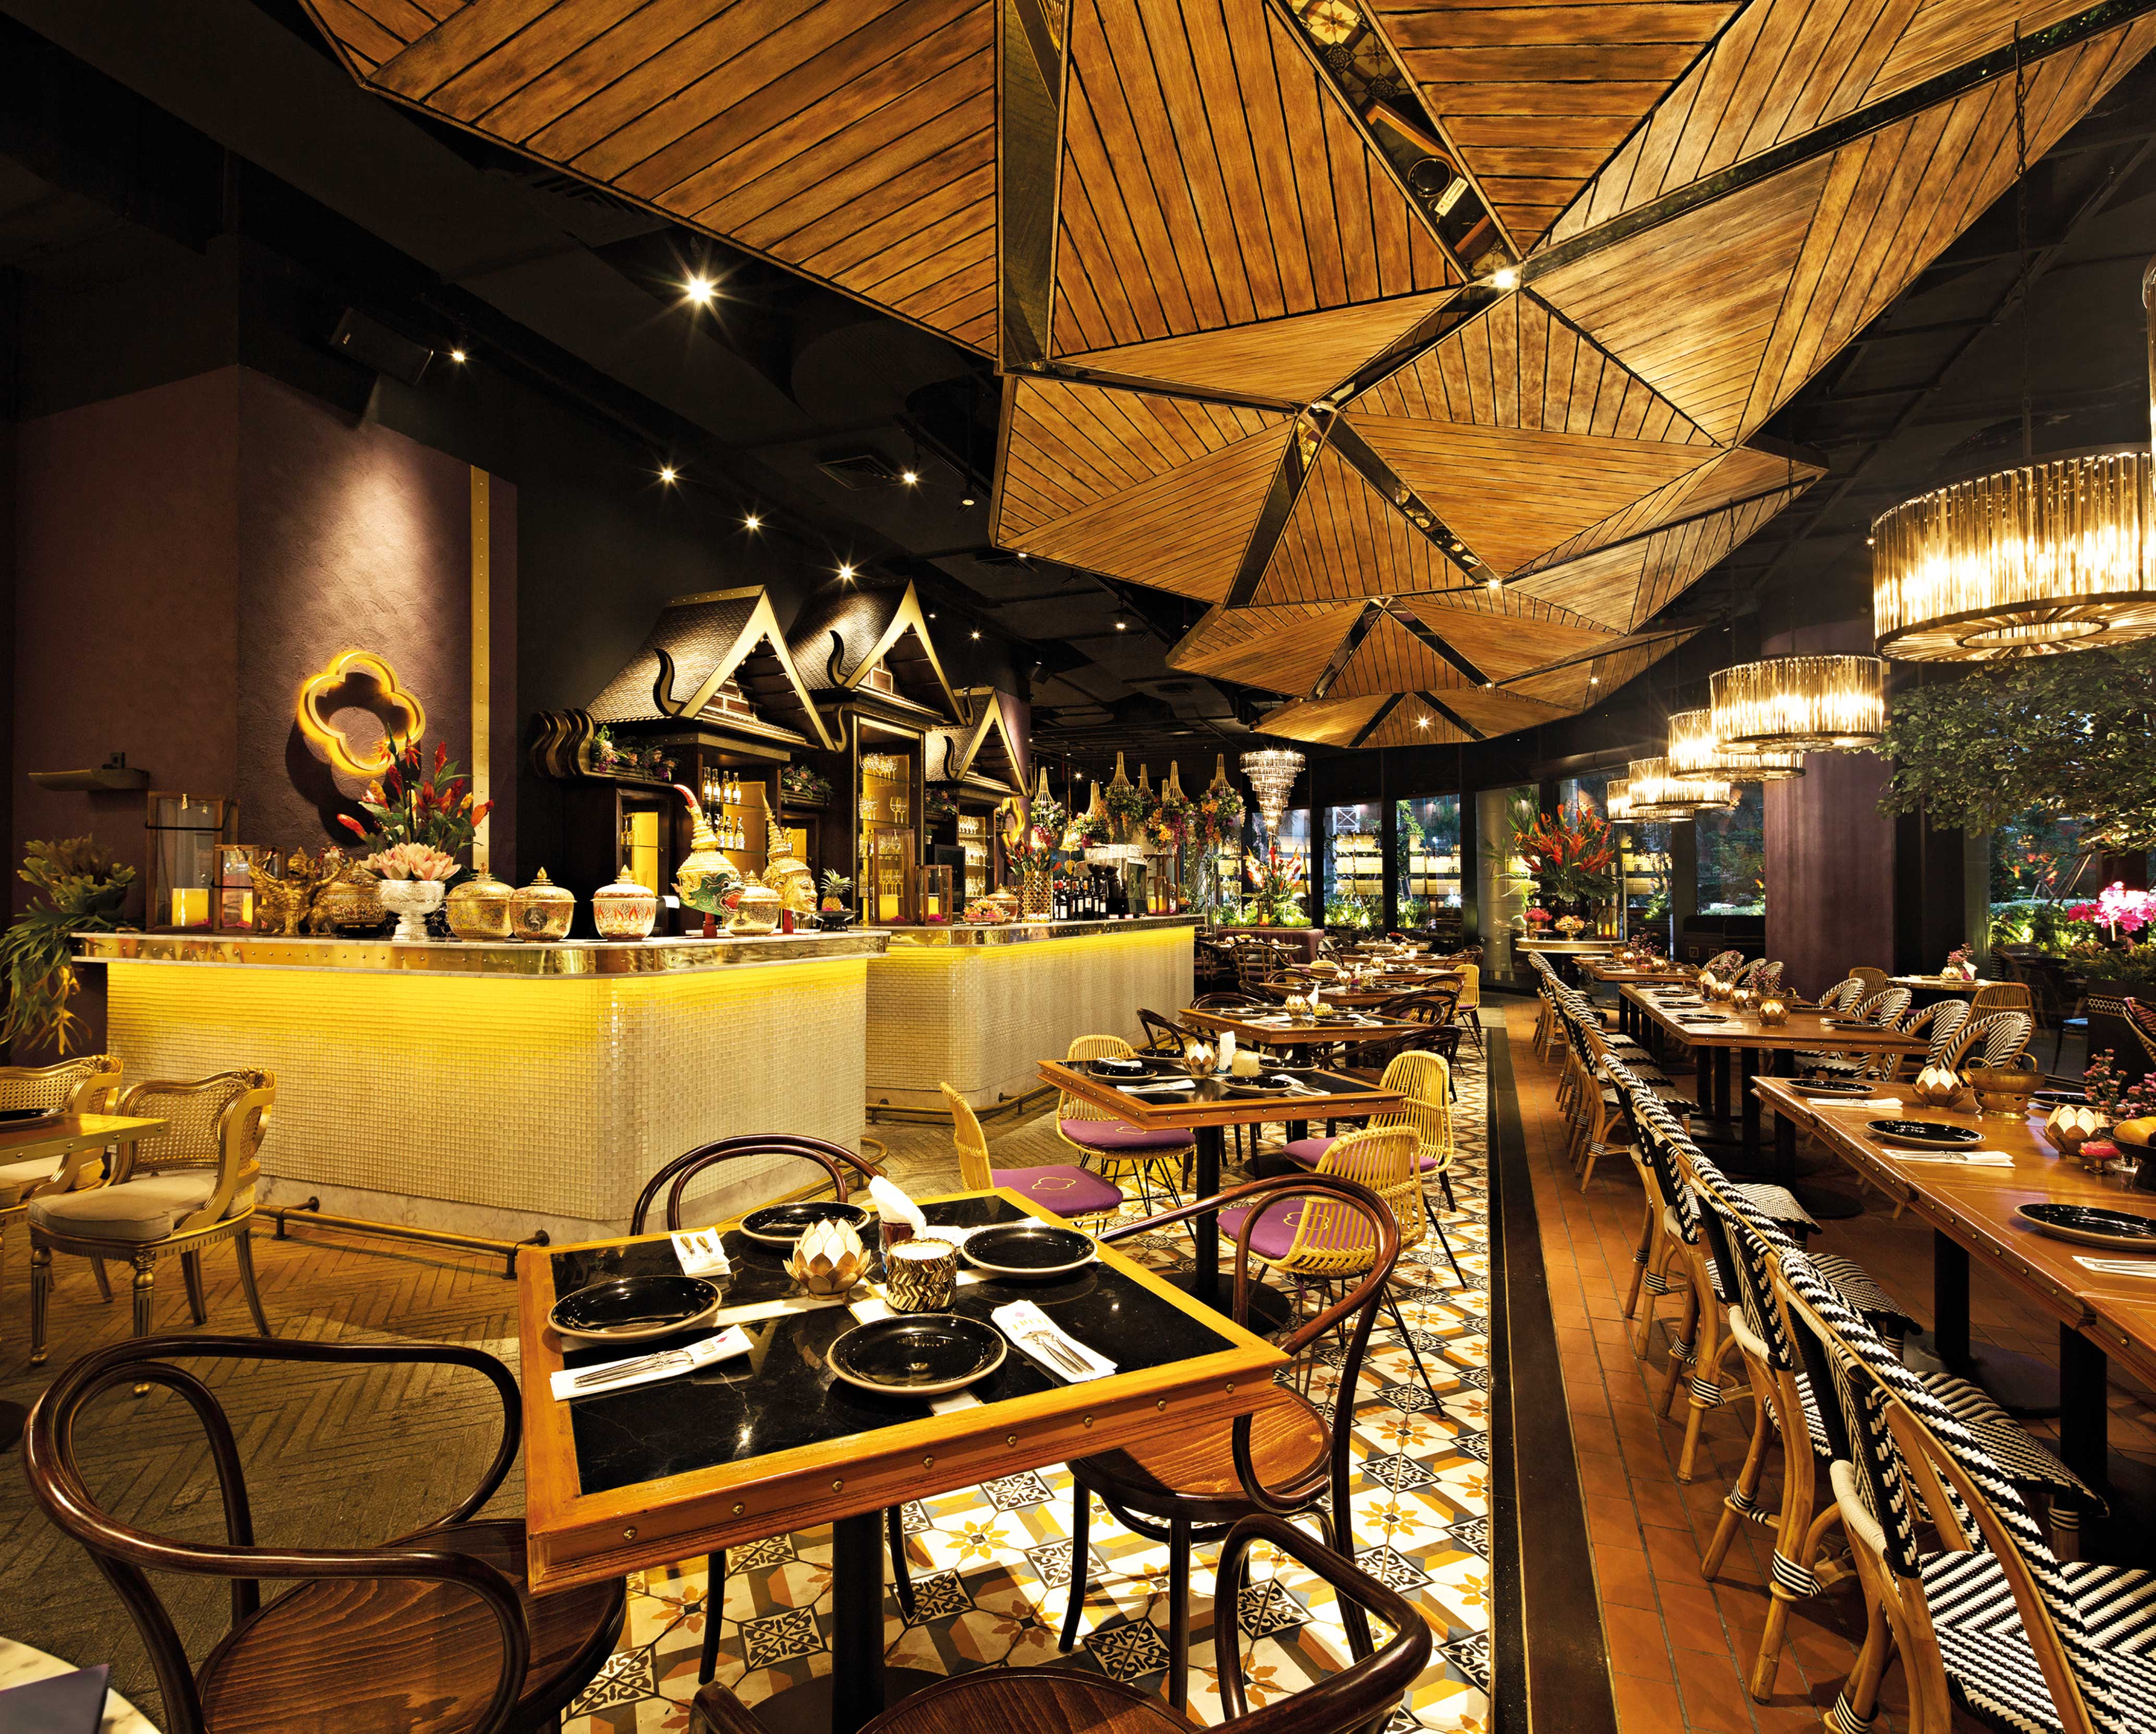 andalin thai kitchen and bar